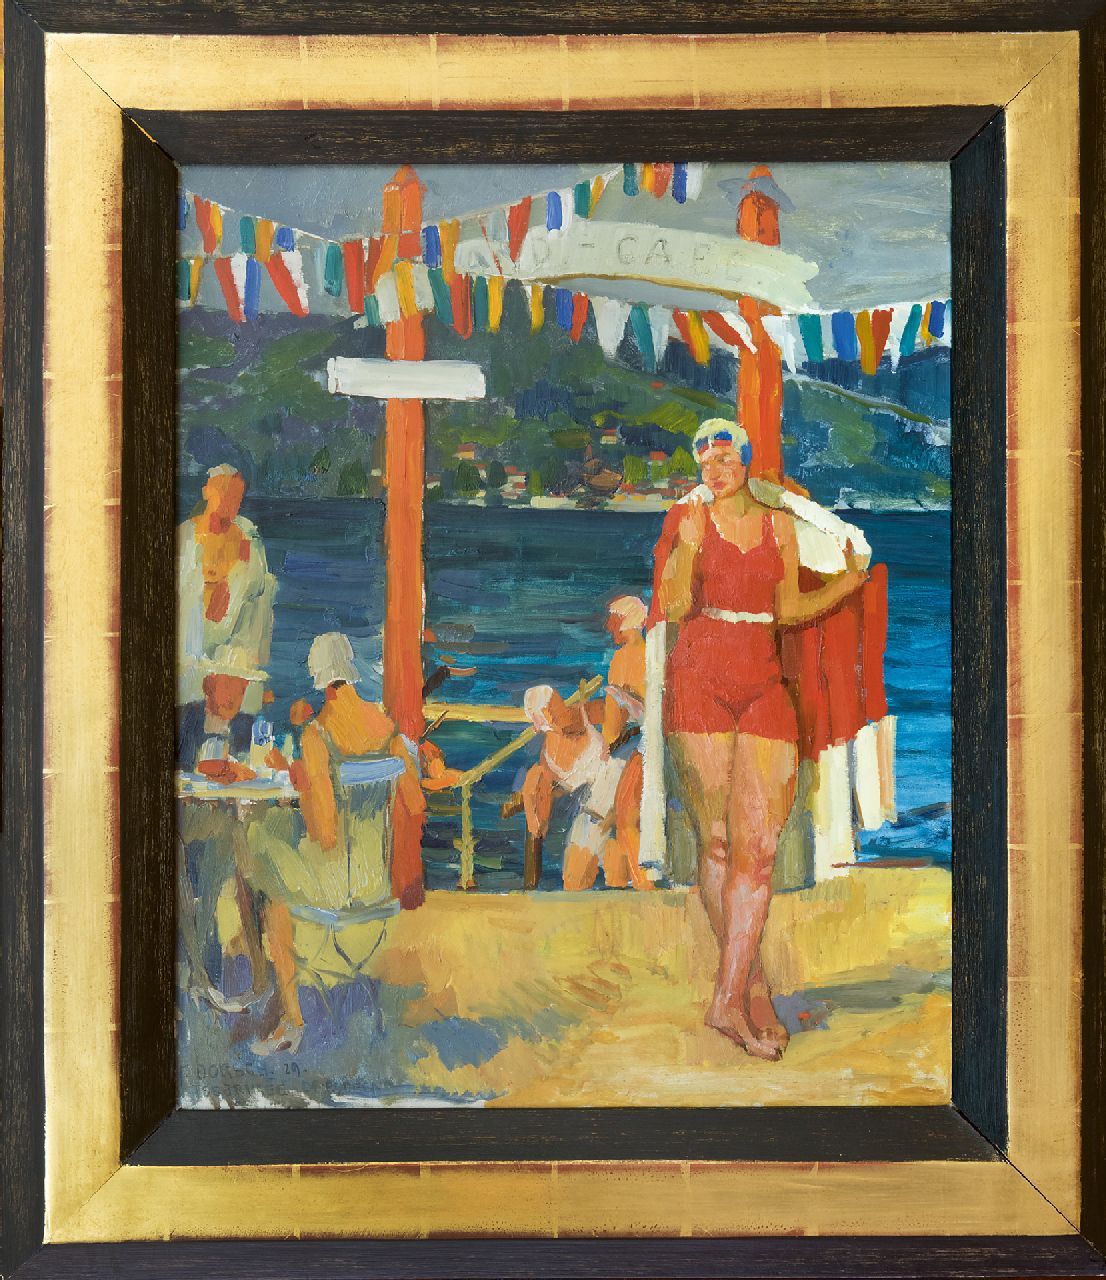 Dorsch F.F.E.  | 'Ferdinand' Franz Engelbert Dorsch, Café at the beach, Southern Germany, oil on canvas 56.2 x 46.4 cm, signed l.l. and dated '29 'Dresden'